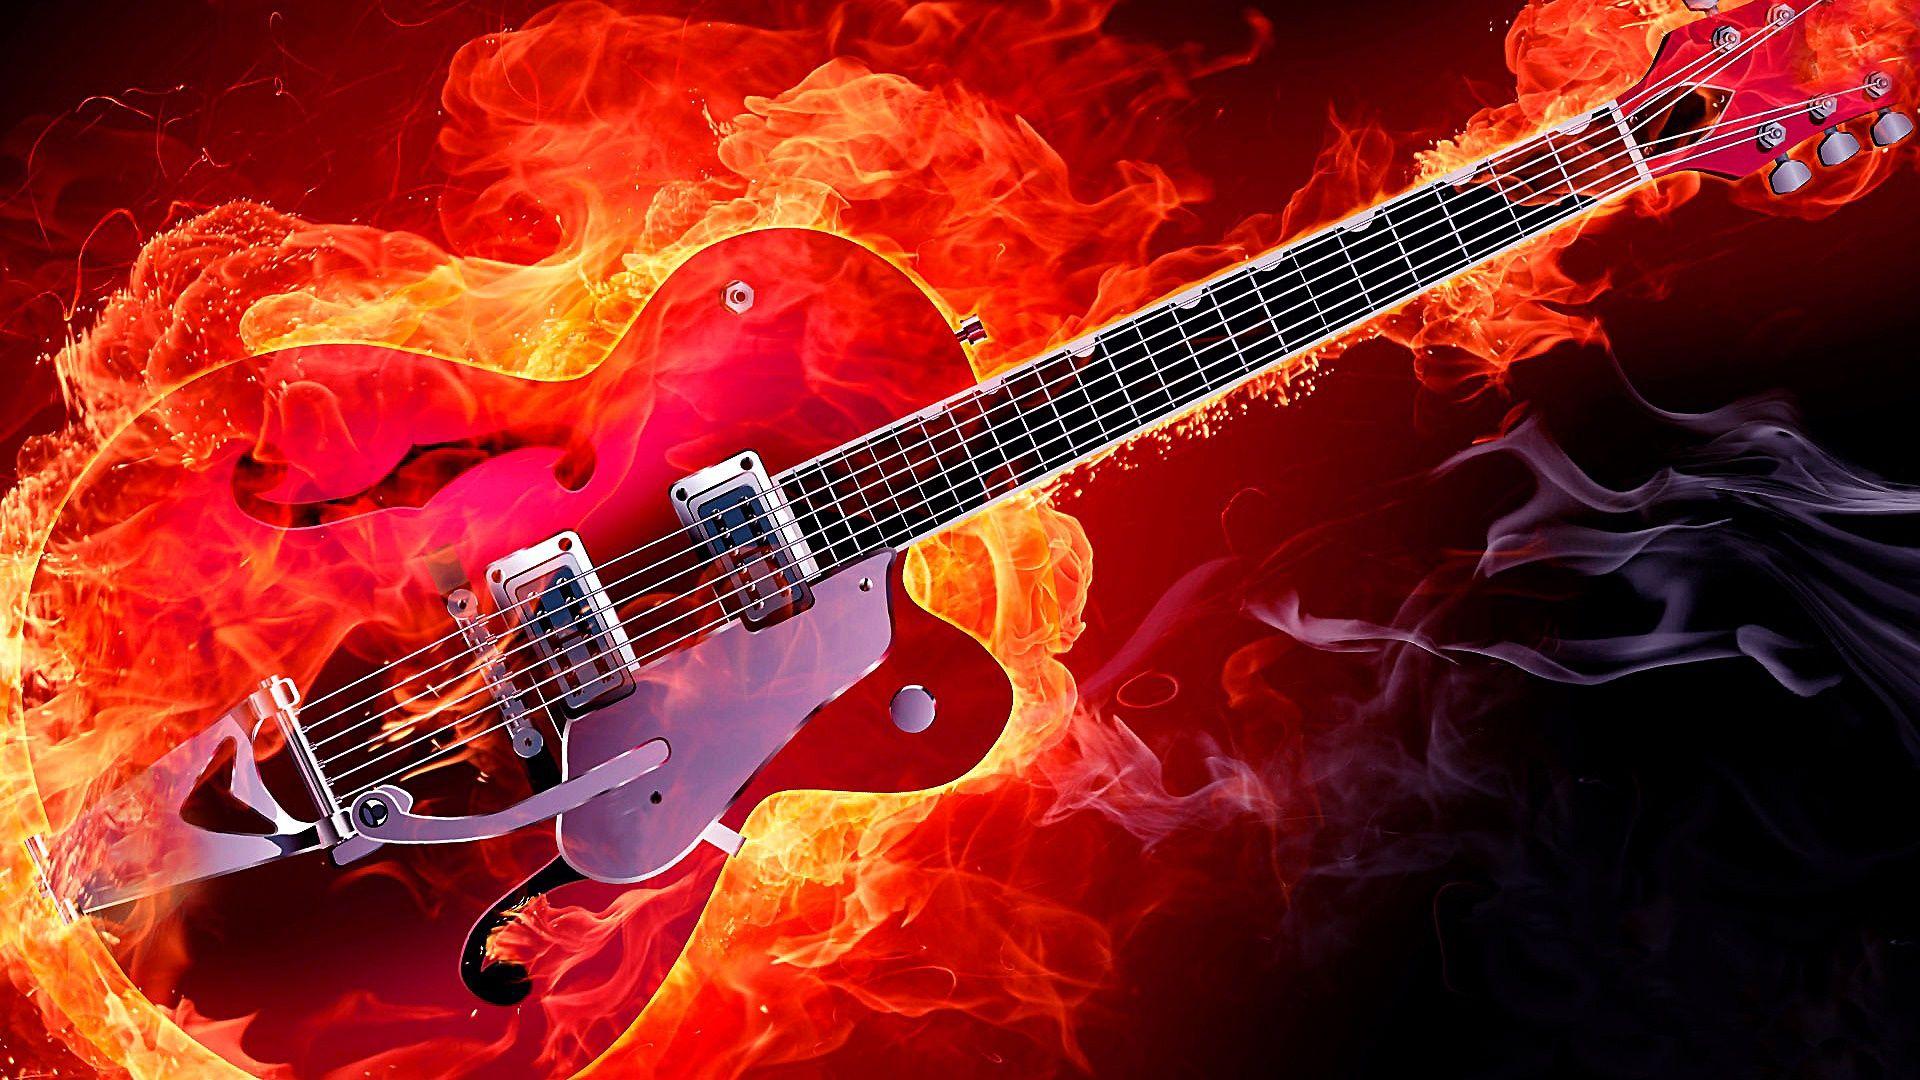 Rockabilly Electric Guitar On Fire Wallpaper. Wallpaper Studio 10